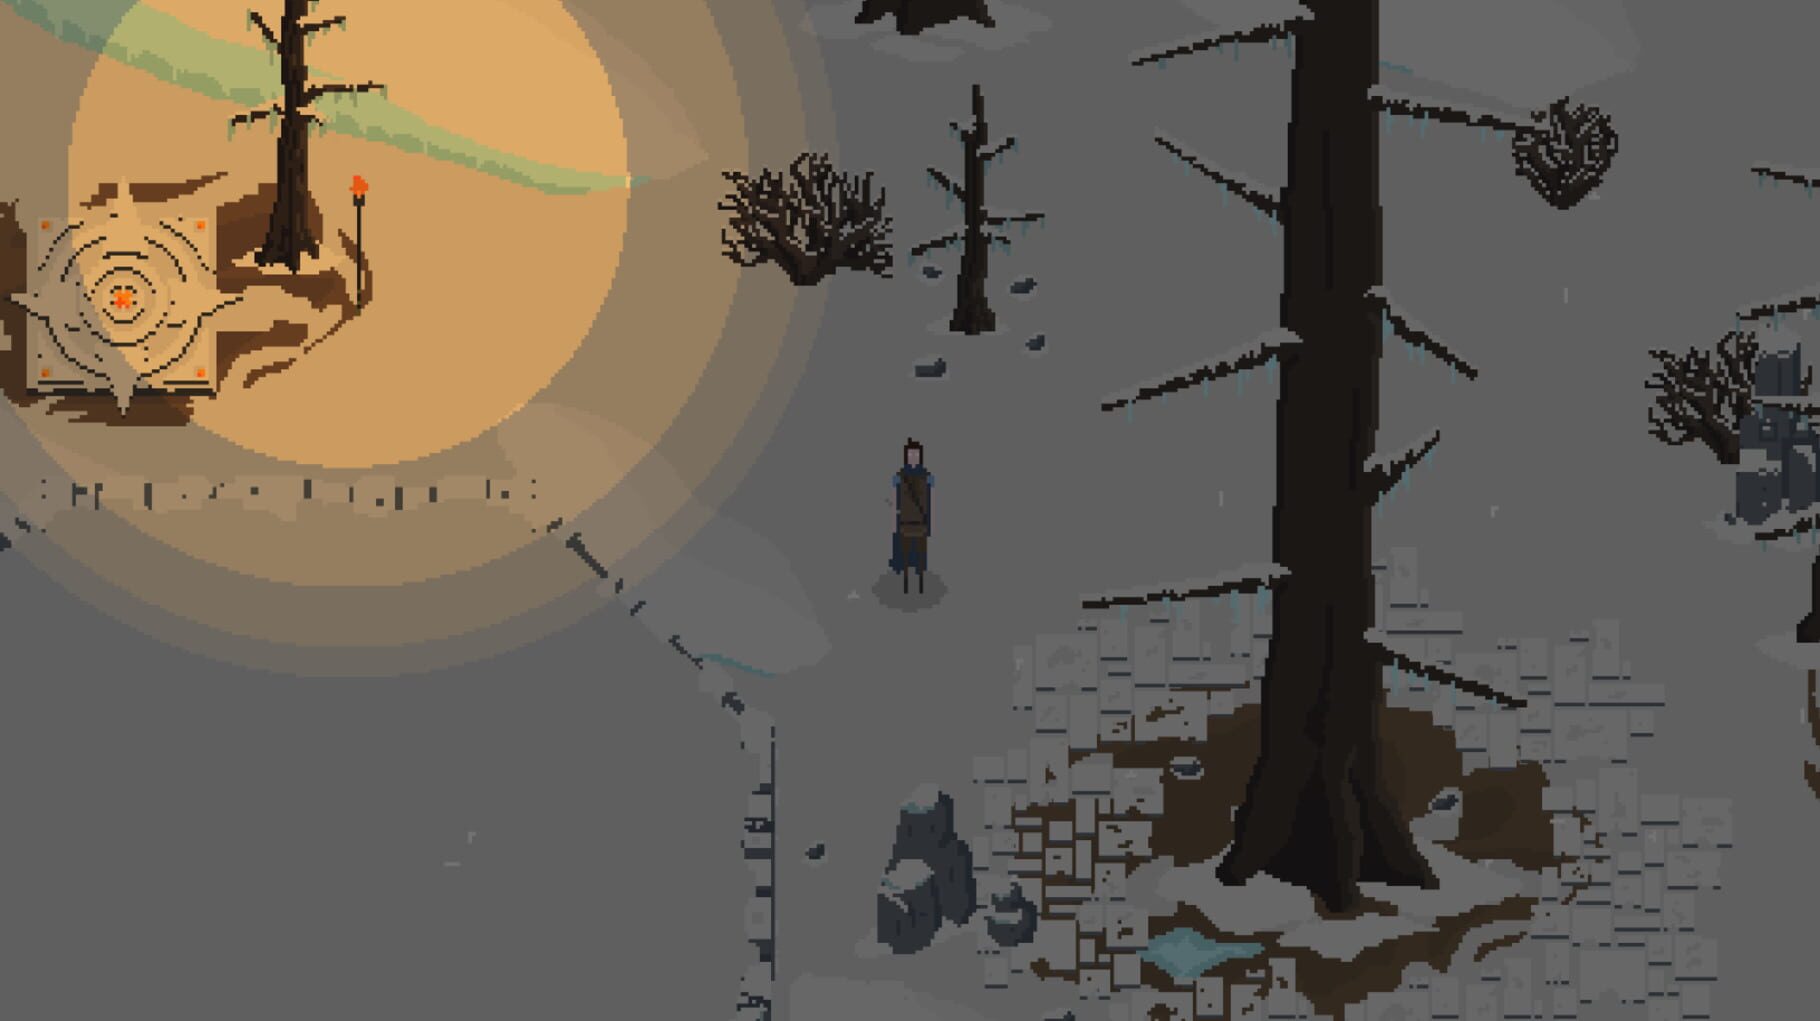 Elden: Path of the Forgotten screenshot